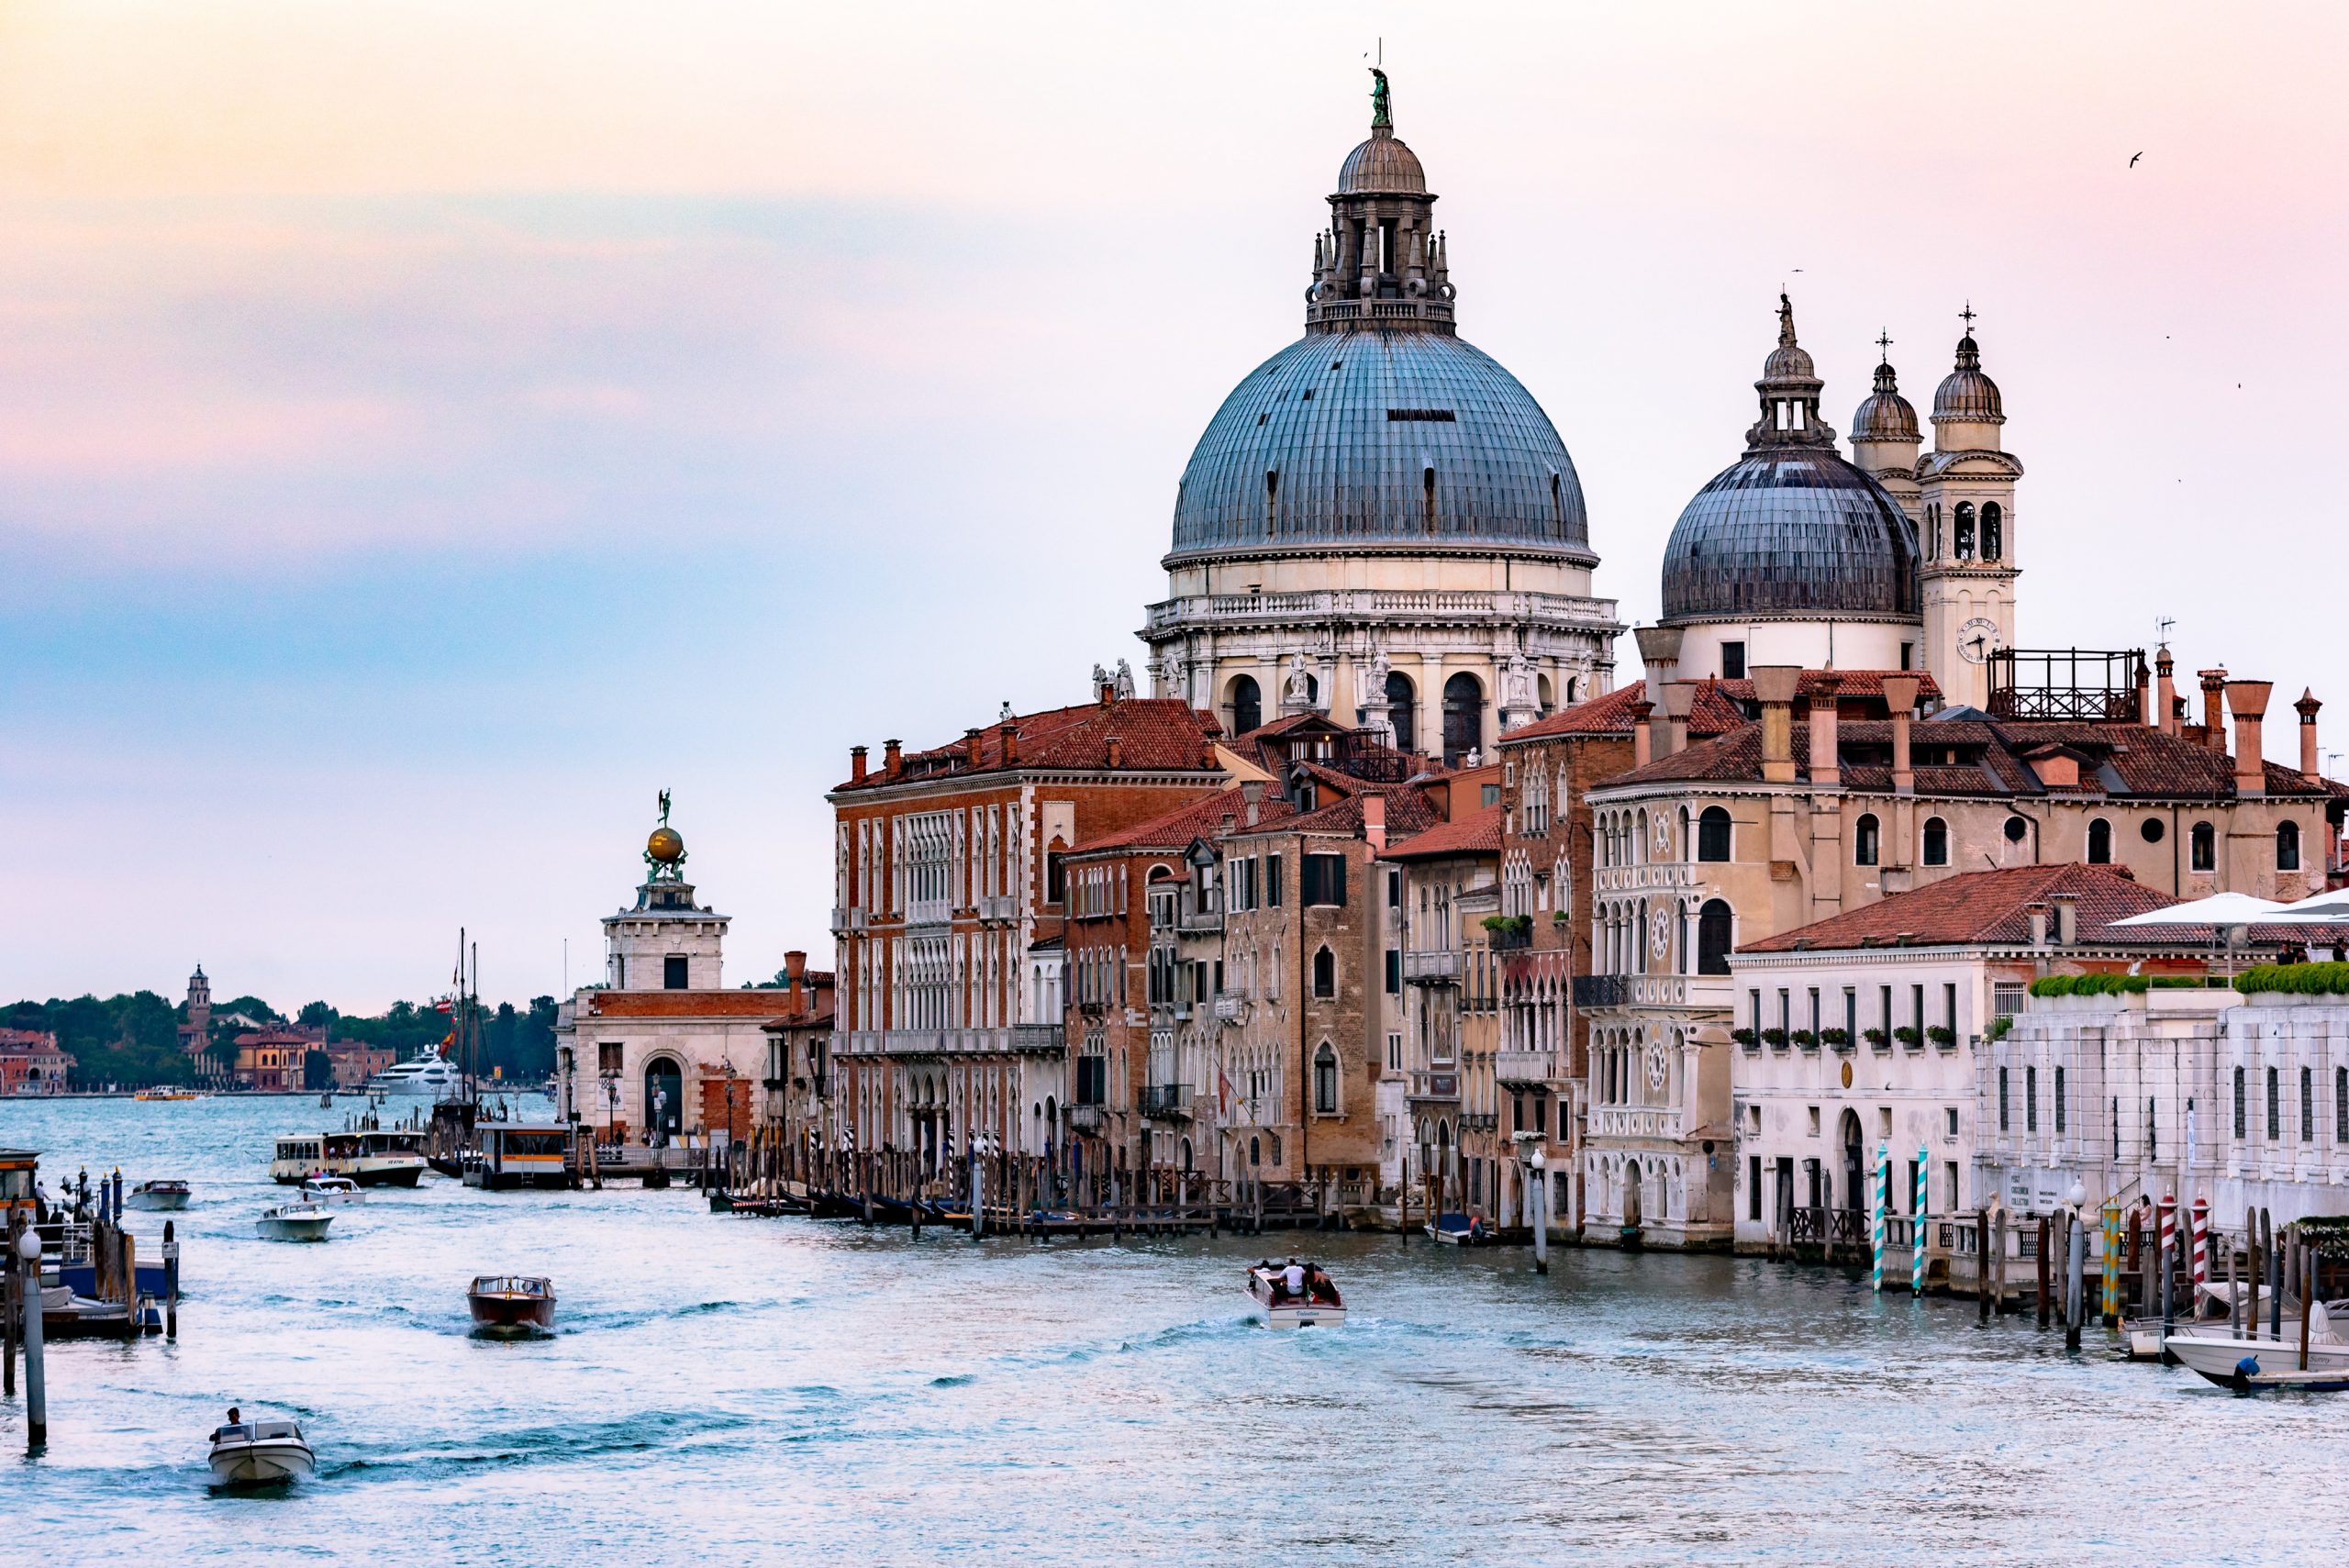 Jadranské more a bohatá architektúra Benátok